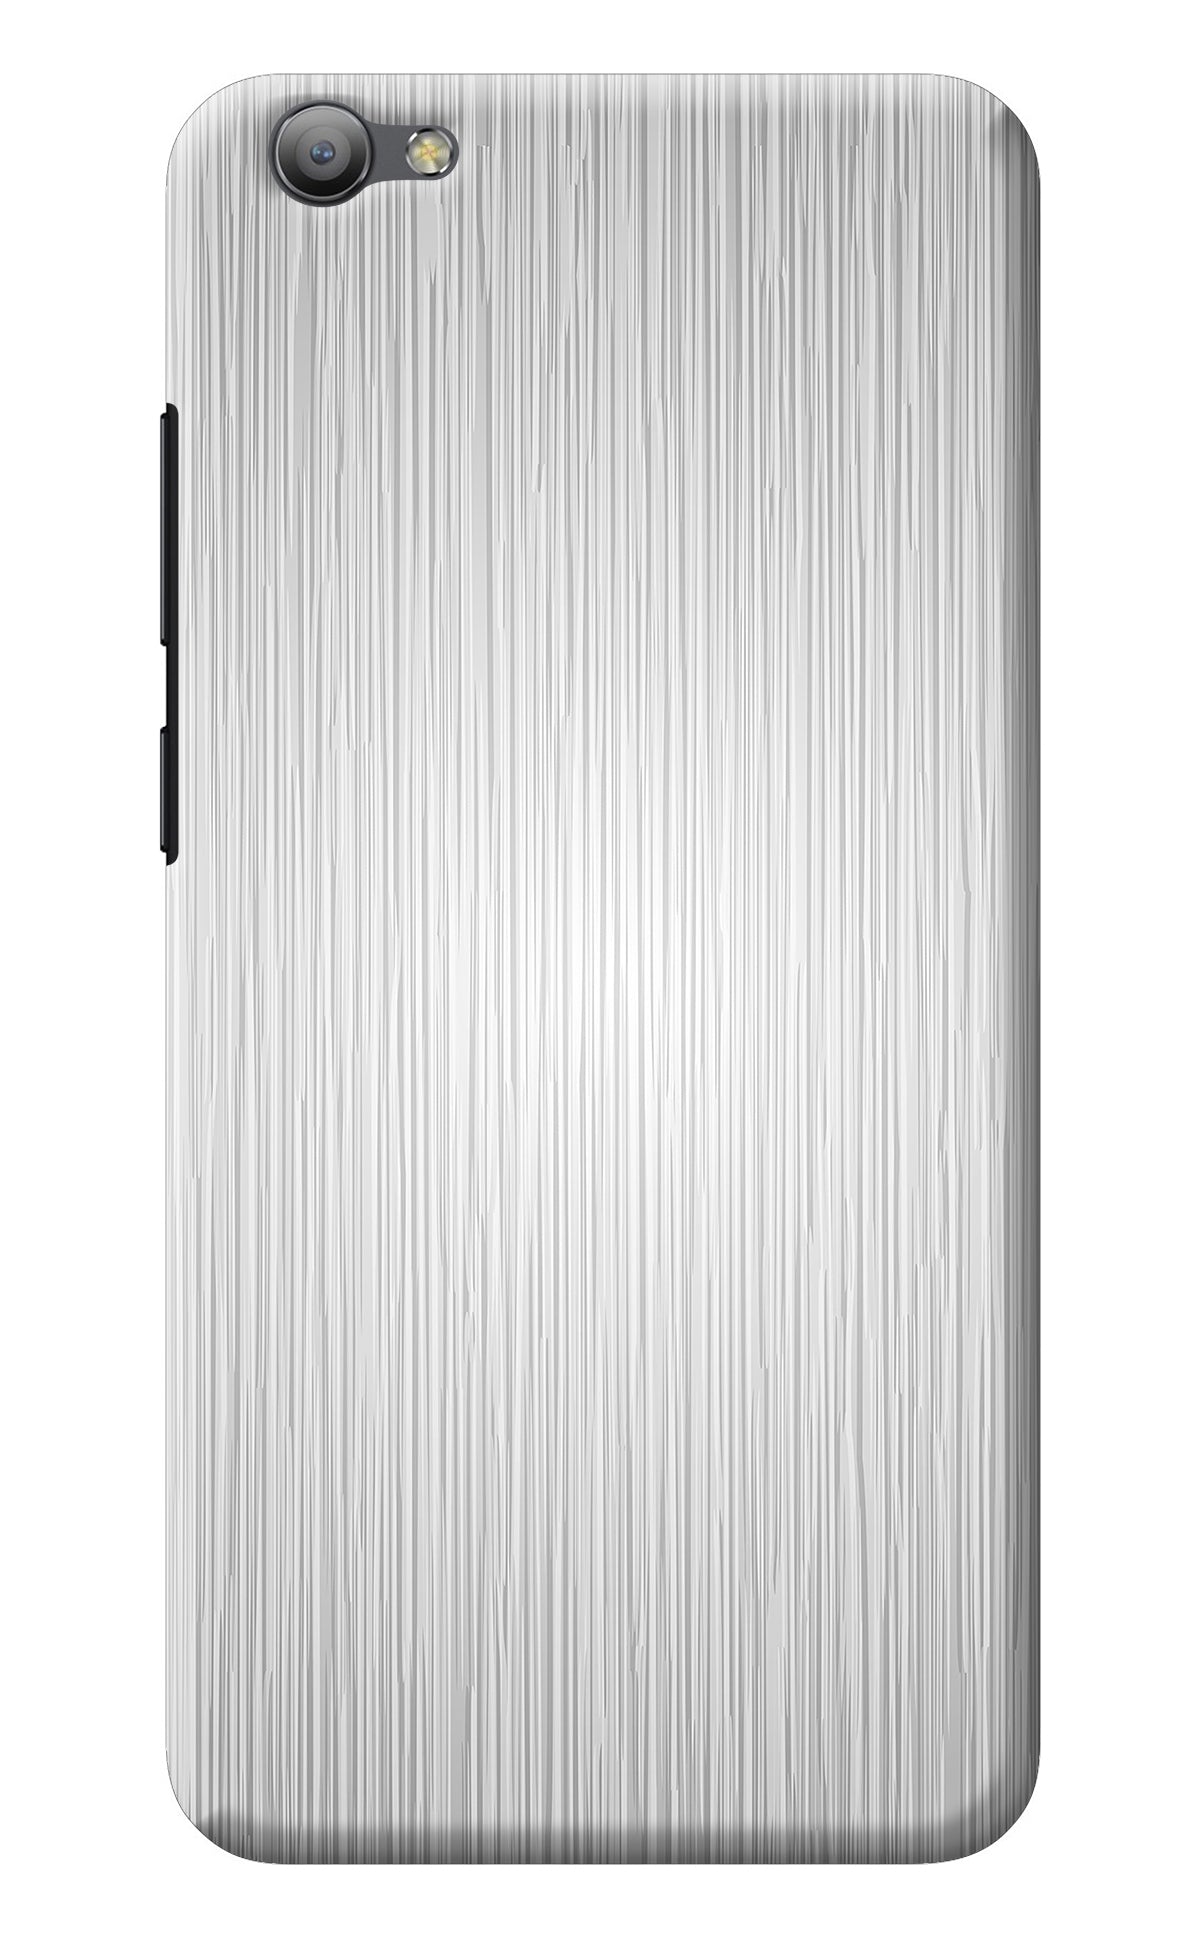 Wooden Grey Texture Vivo V5/V5s Back Cover